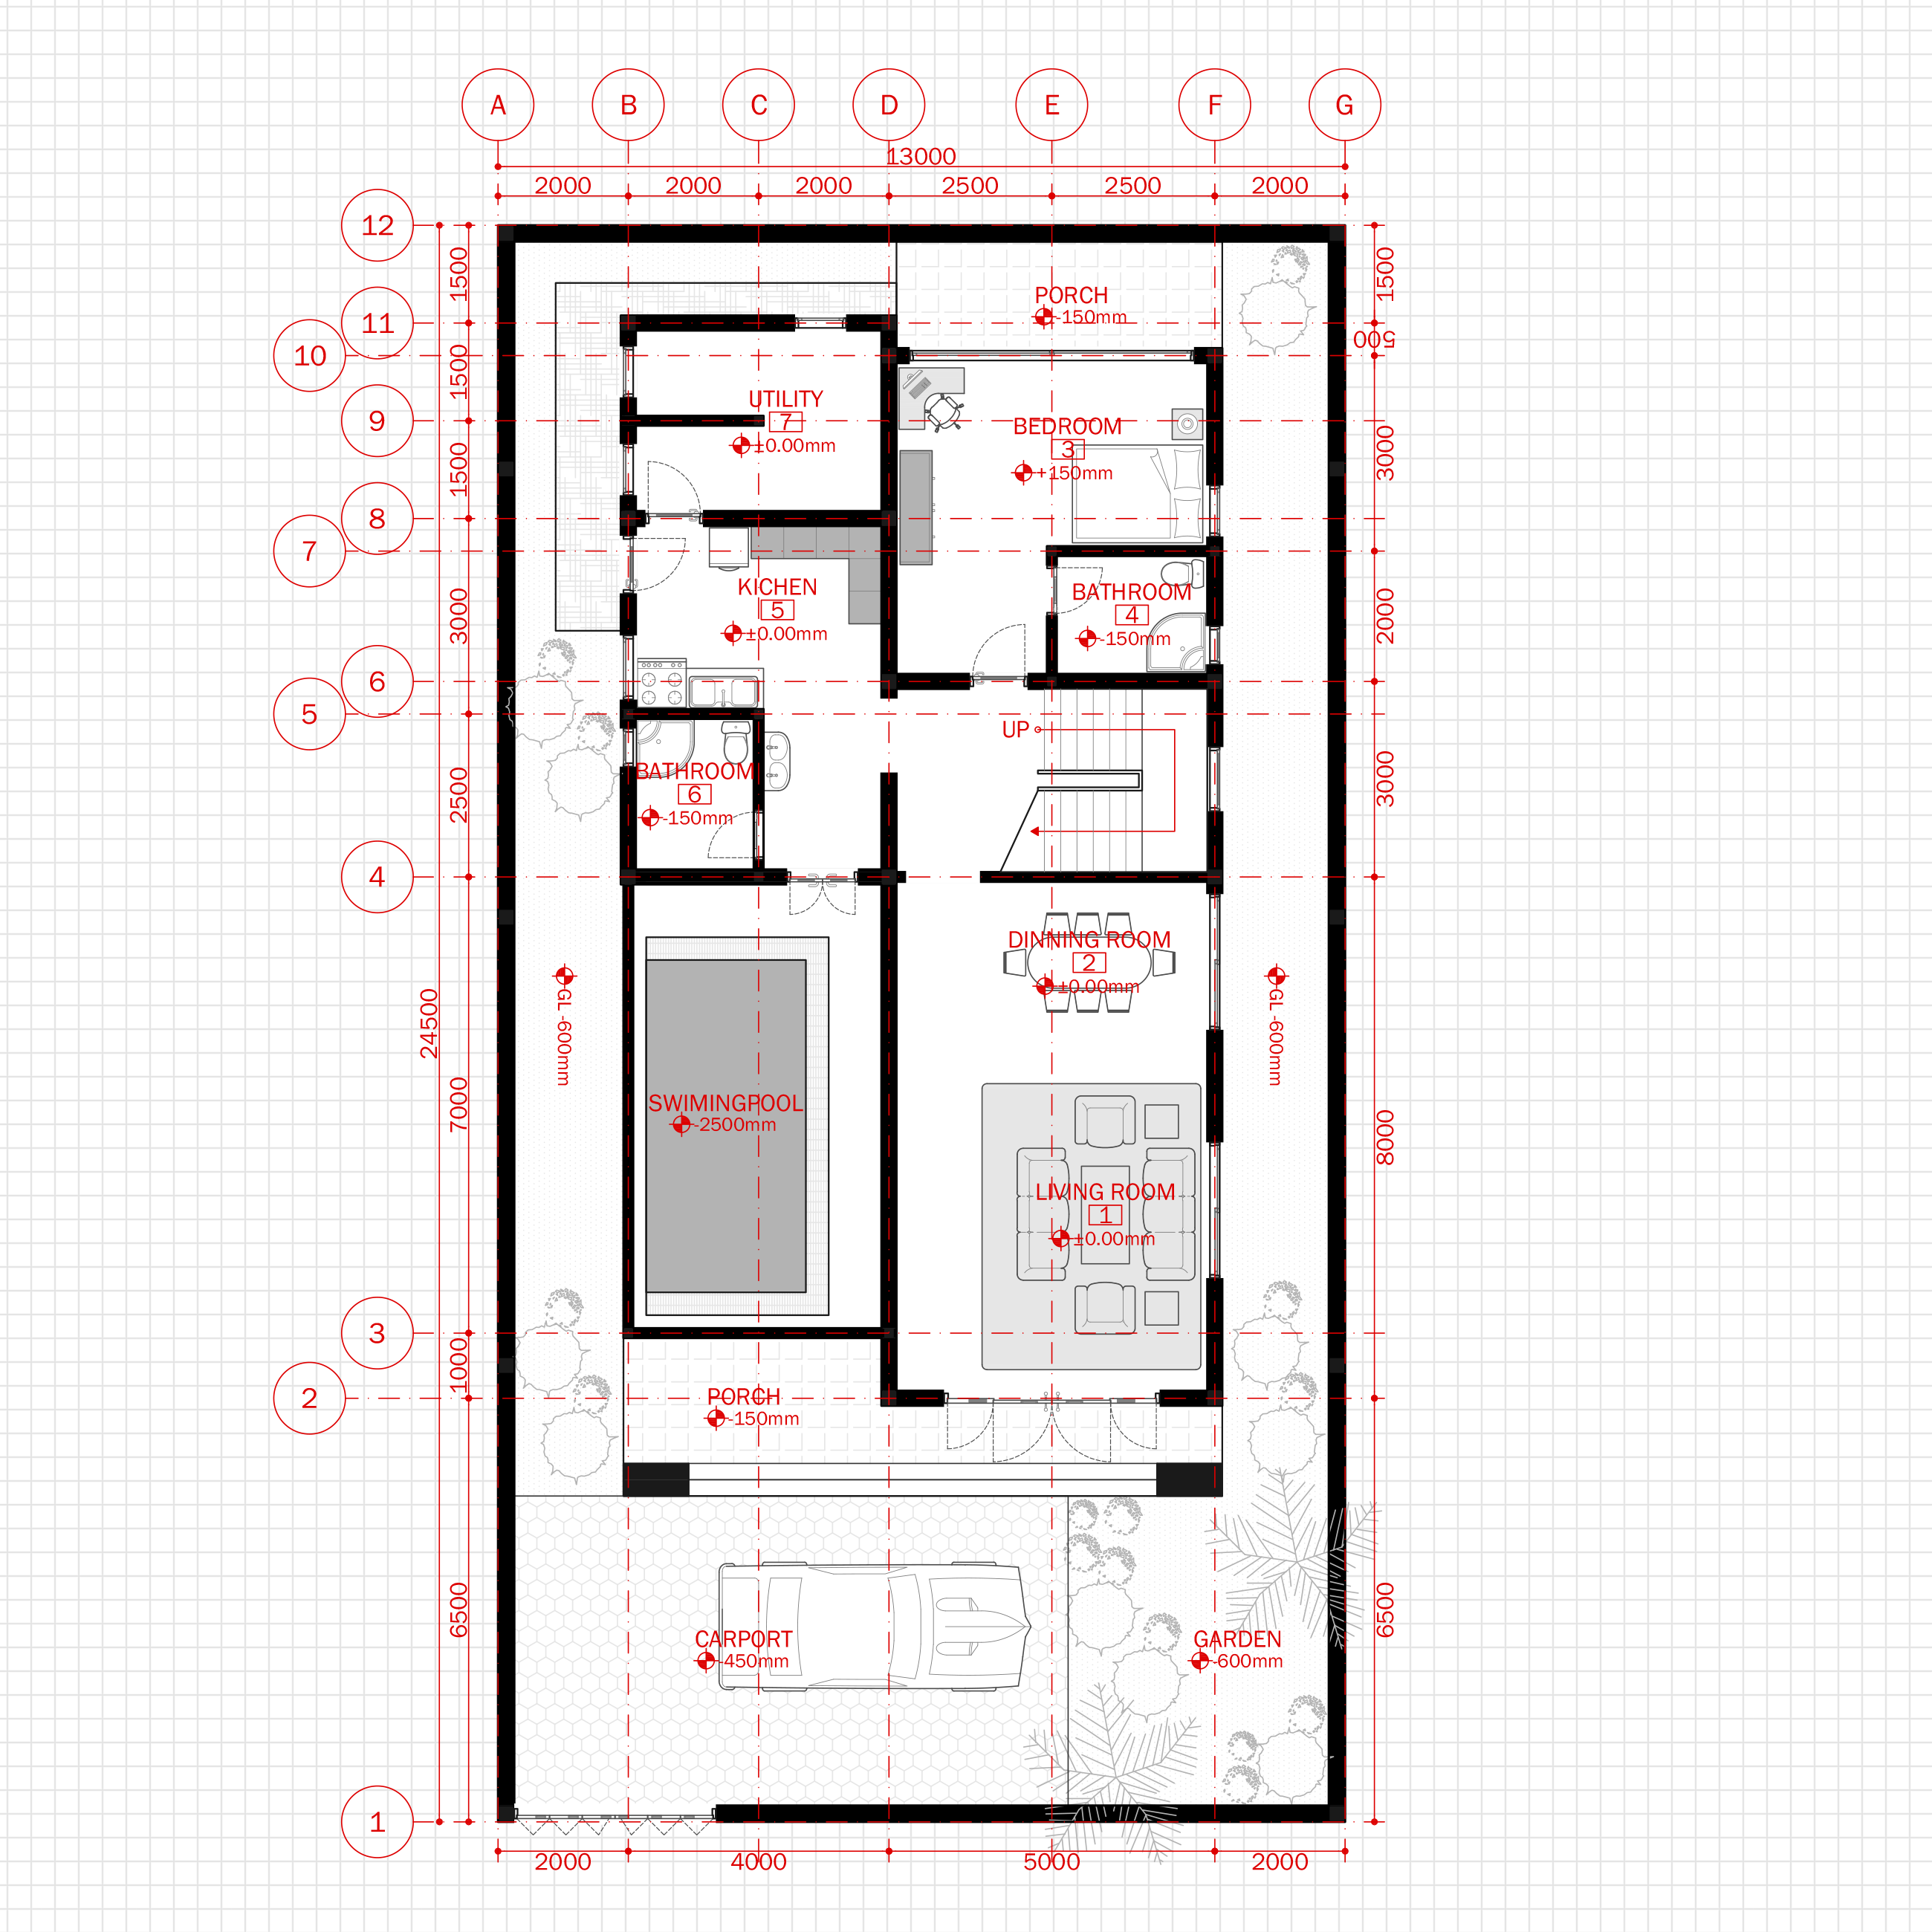 Residential Modern Villa 3 Architecture Plan with floor plan metric